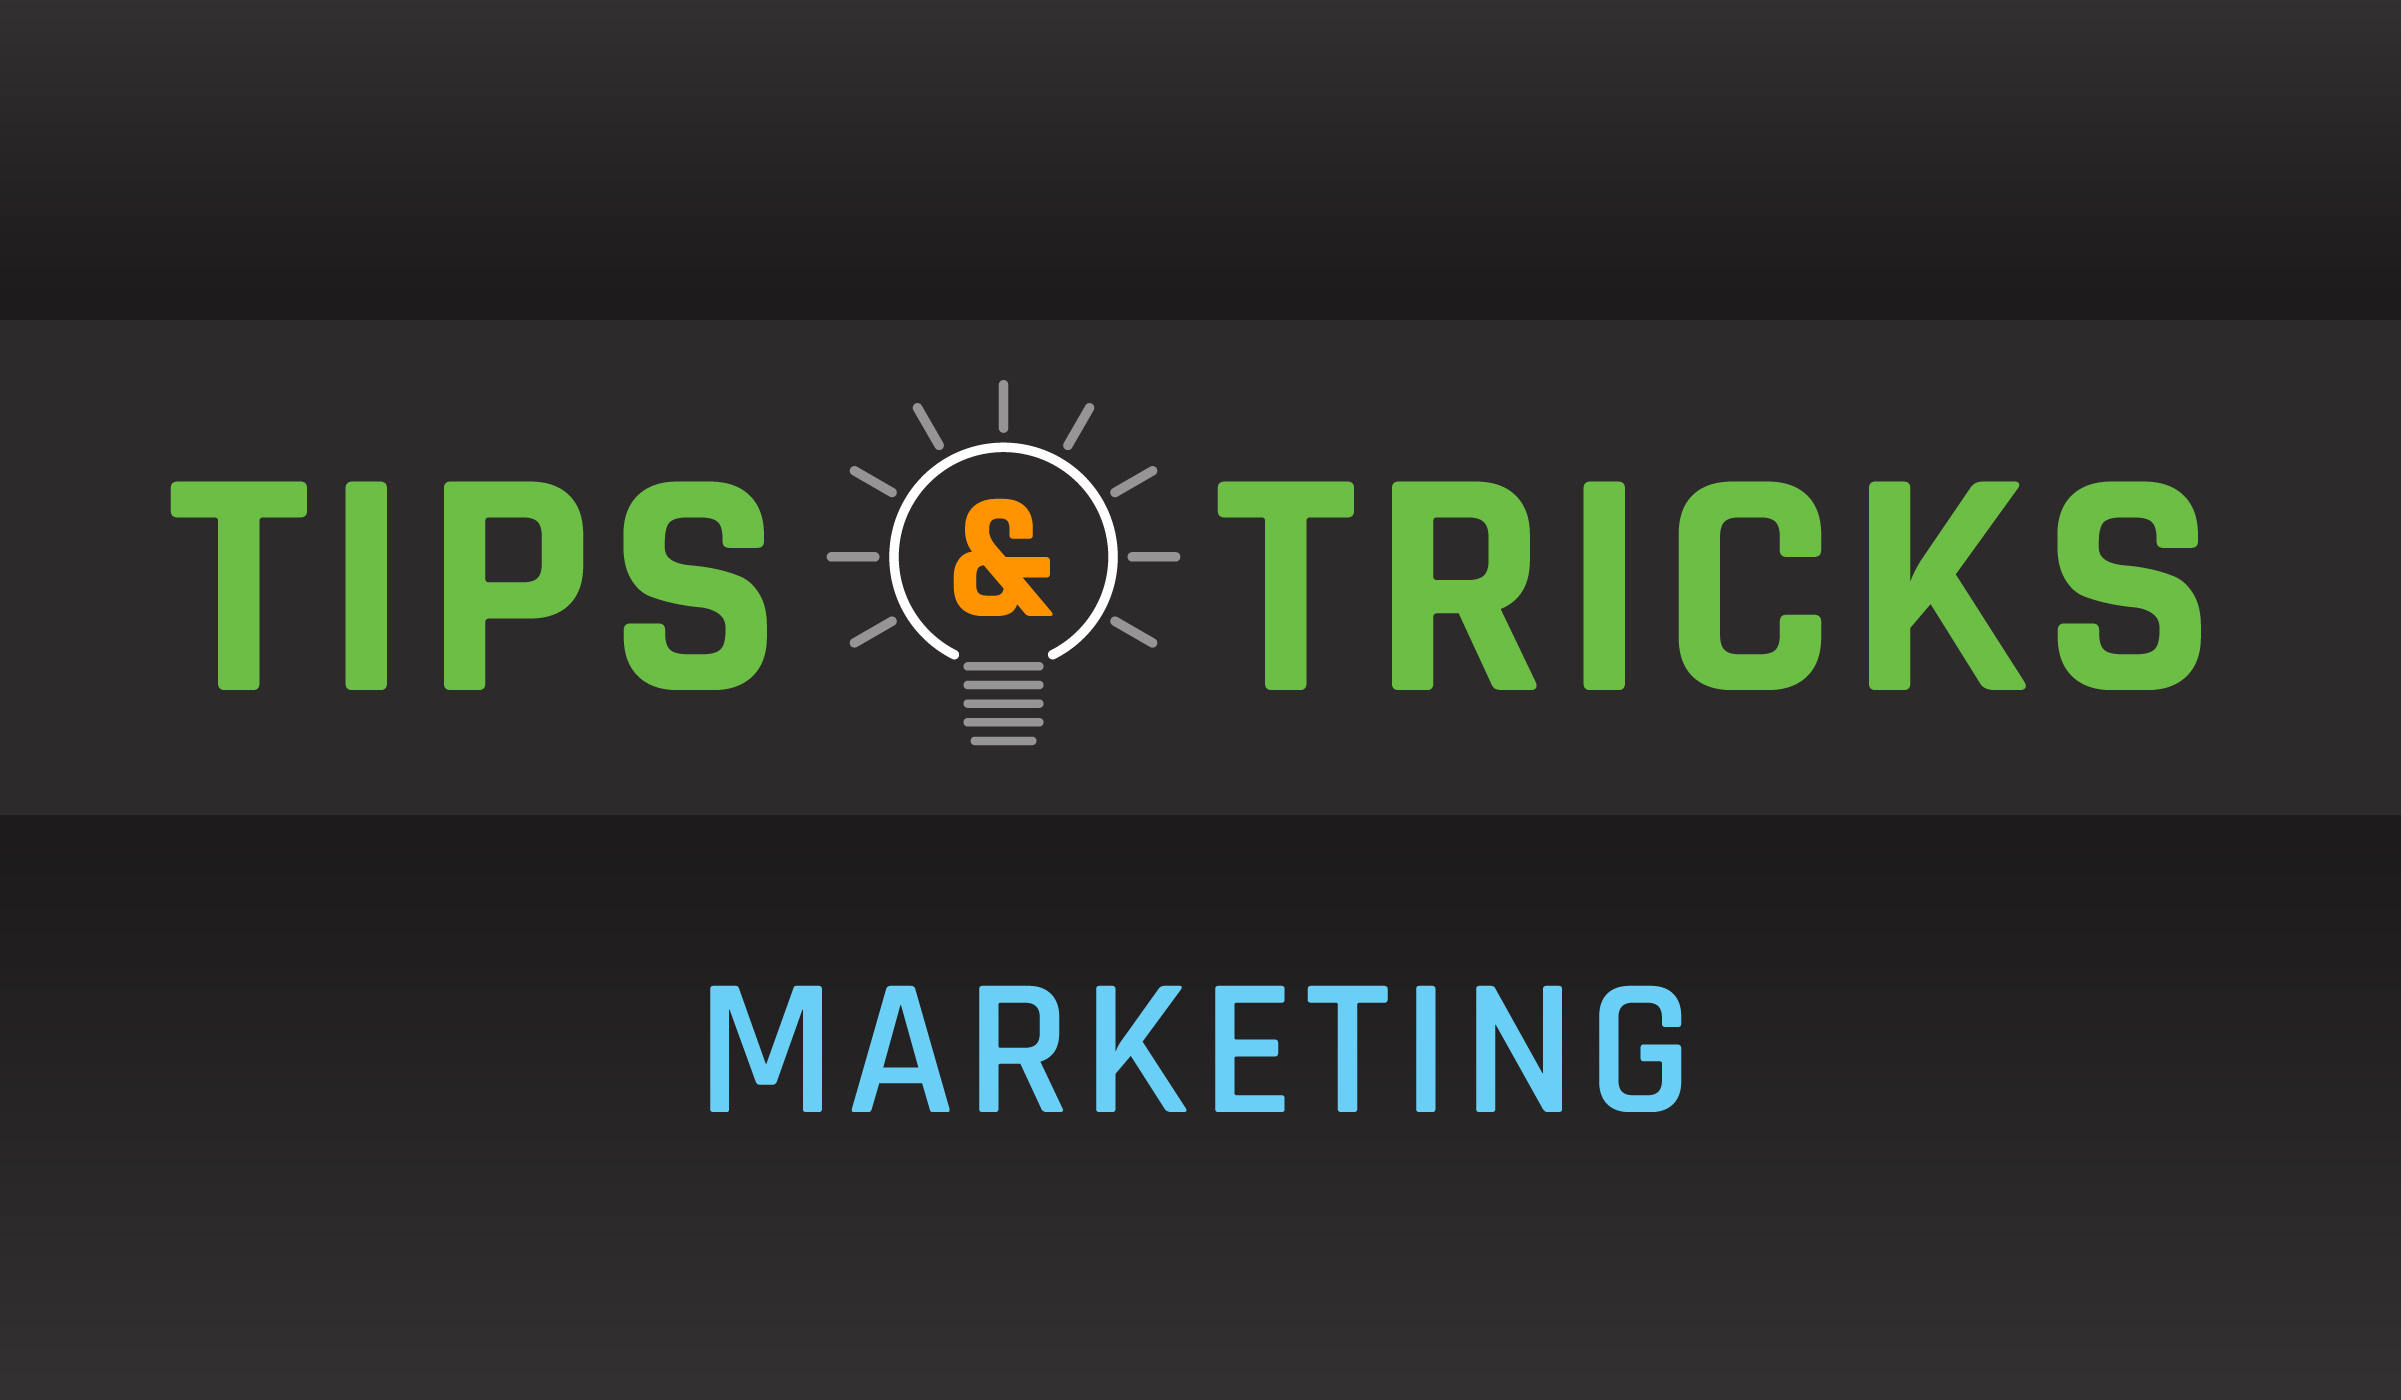 Tips & Tricks / Marketing